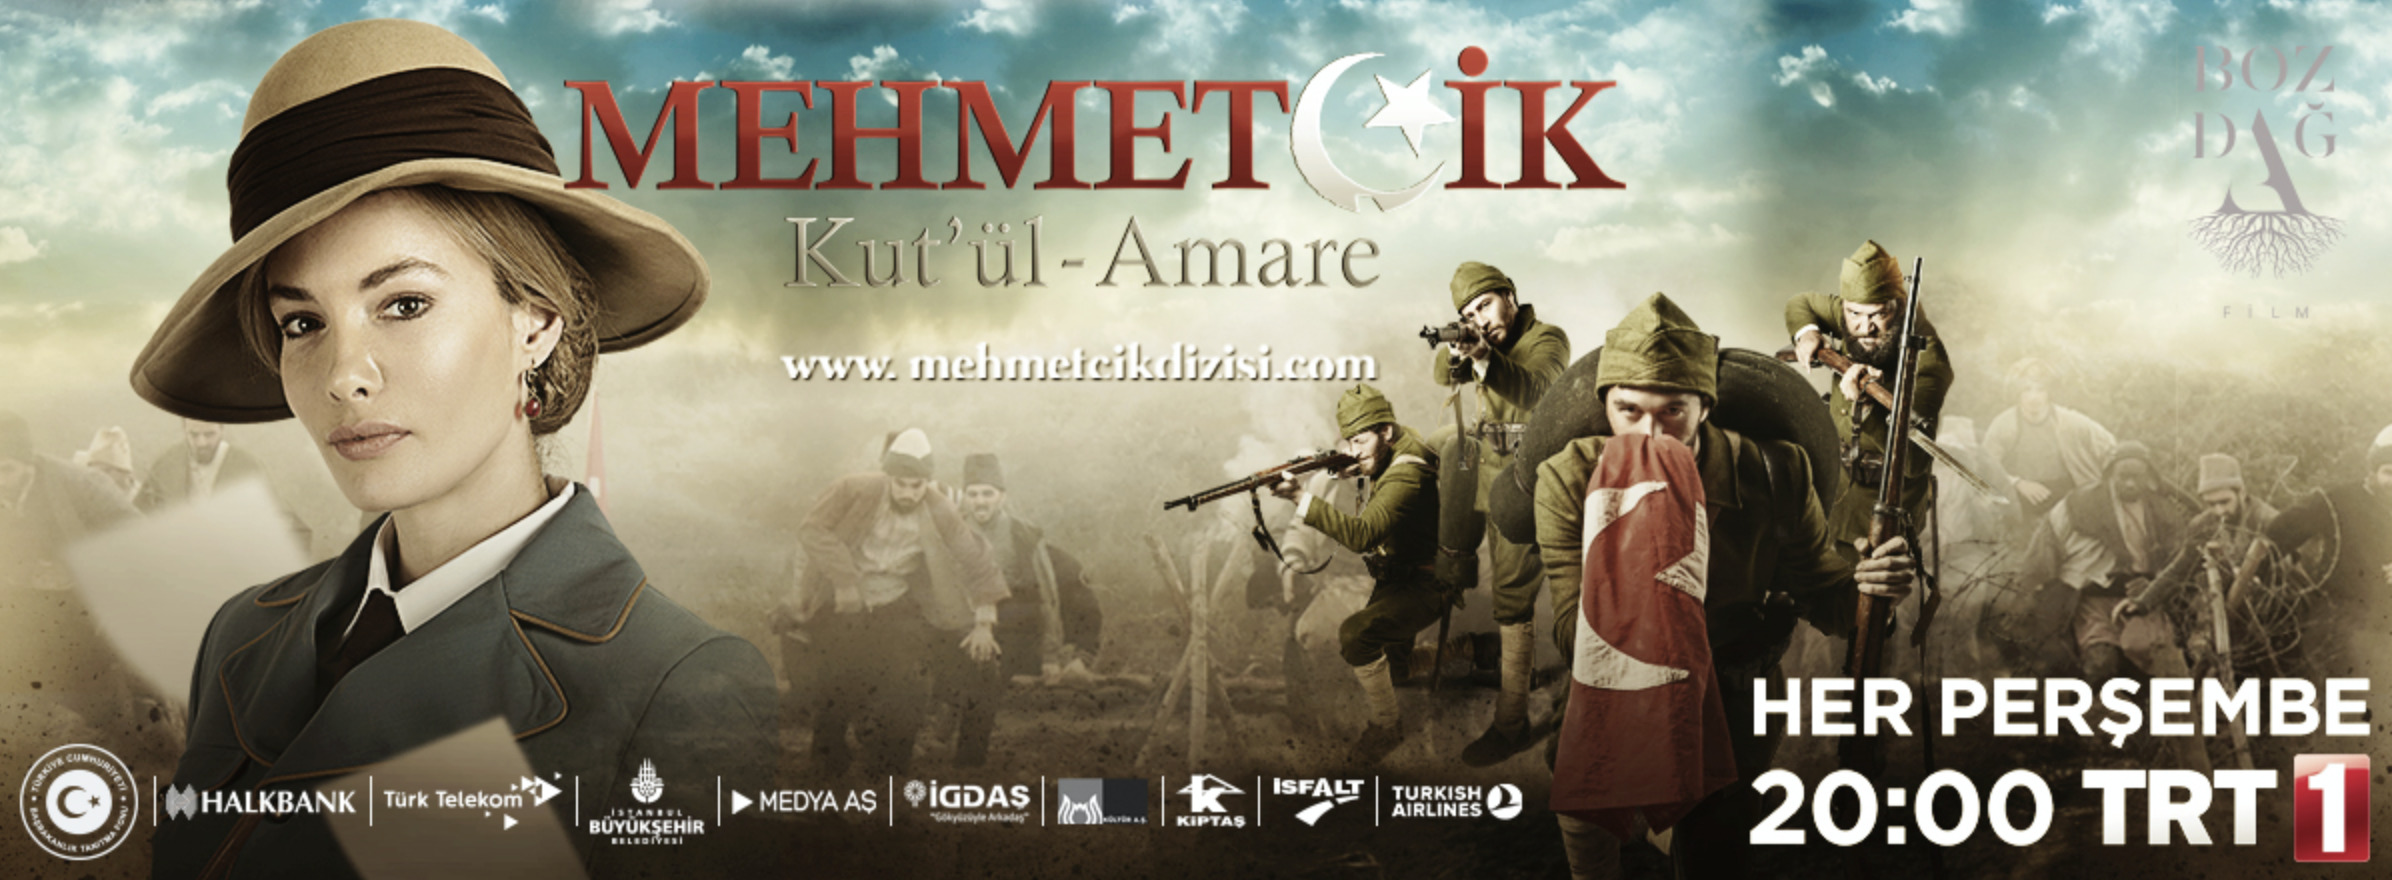 Mega Sized TV Poster Image for Mehmetçik Kut'ül Amare (#29 of 41)